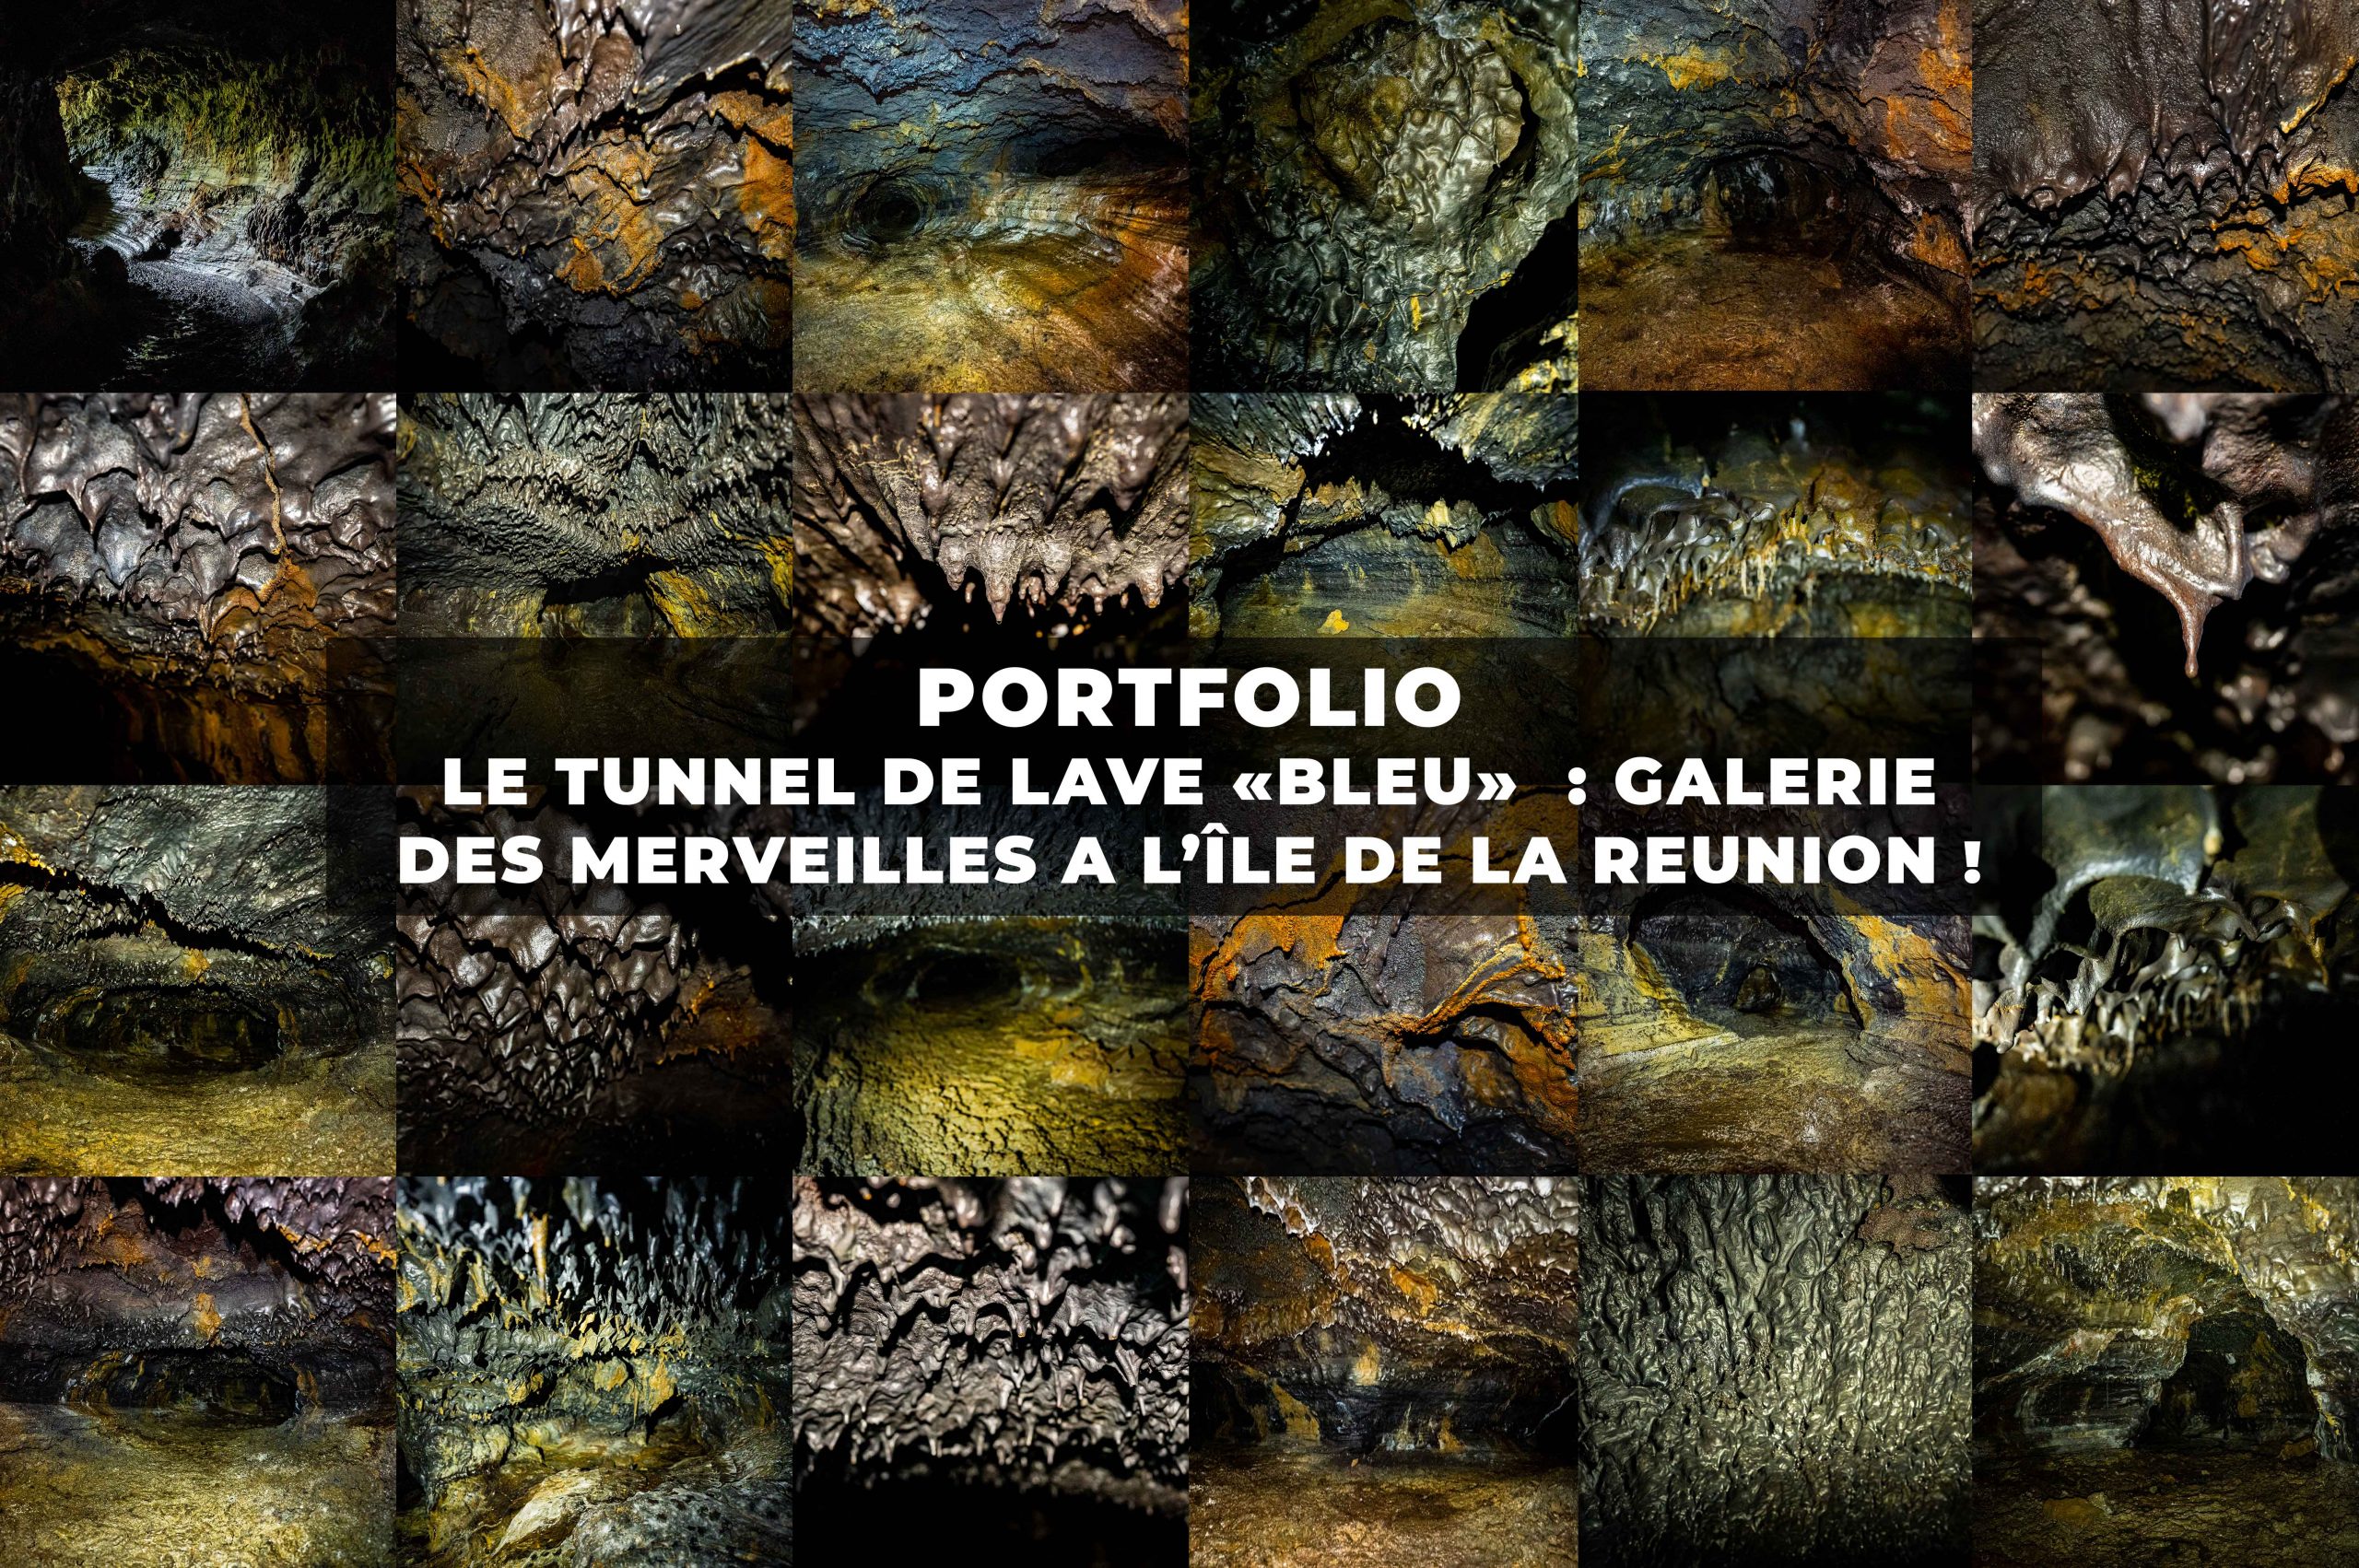 Portfolio Tunnel de lave Bleu - ile de La Réunion © Brieuc Coessens